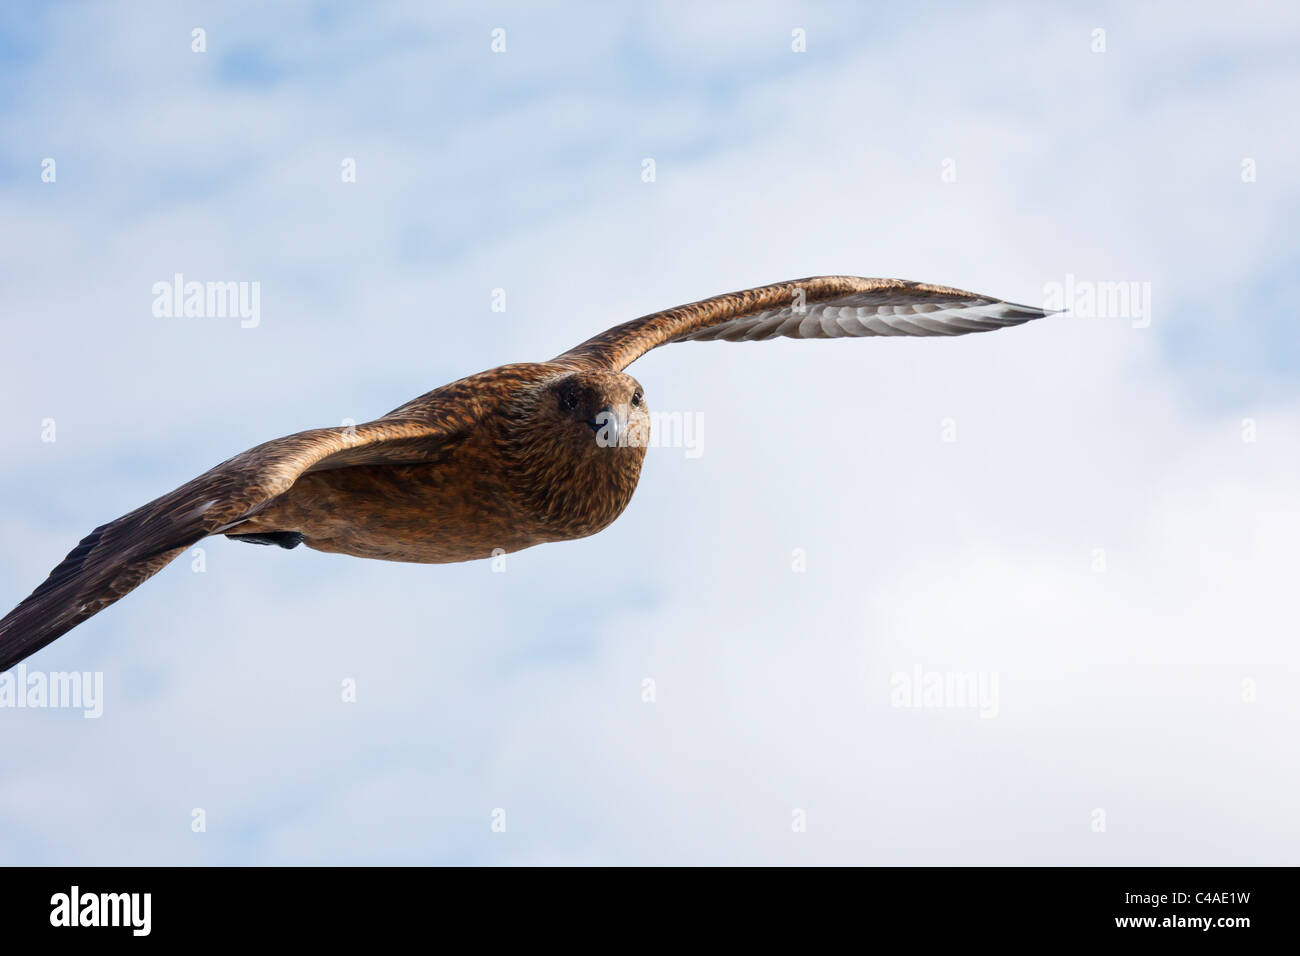 Große Raubmöwe oder bonxie (Catharacta skua) Vogel im Flug Schottland, Großbritannien, Großbritannien Stockfoto